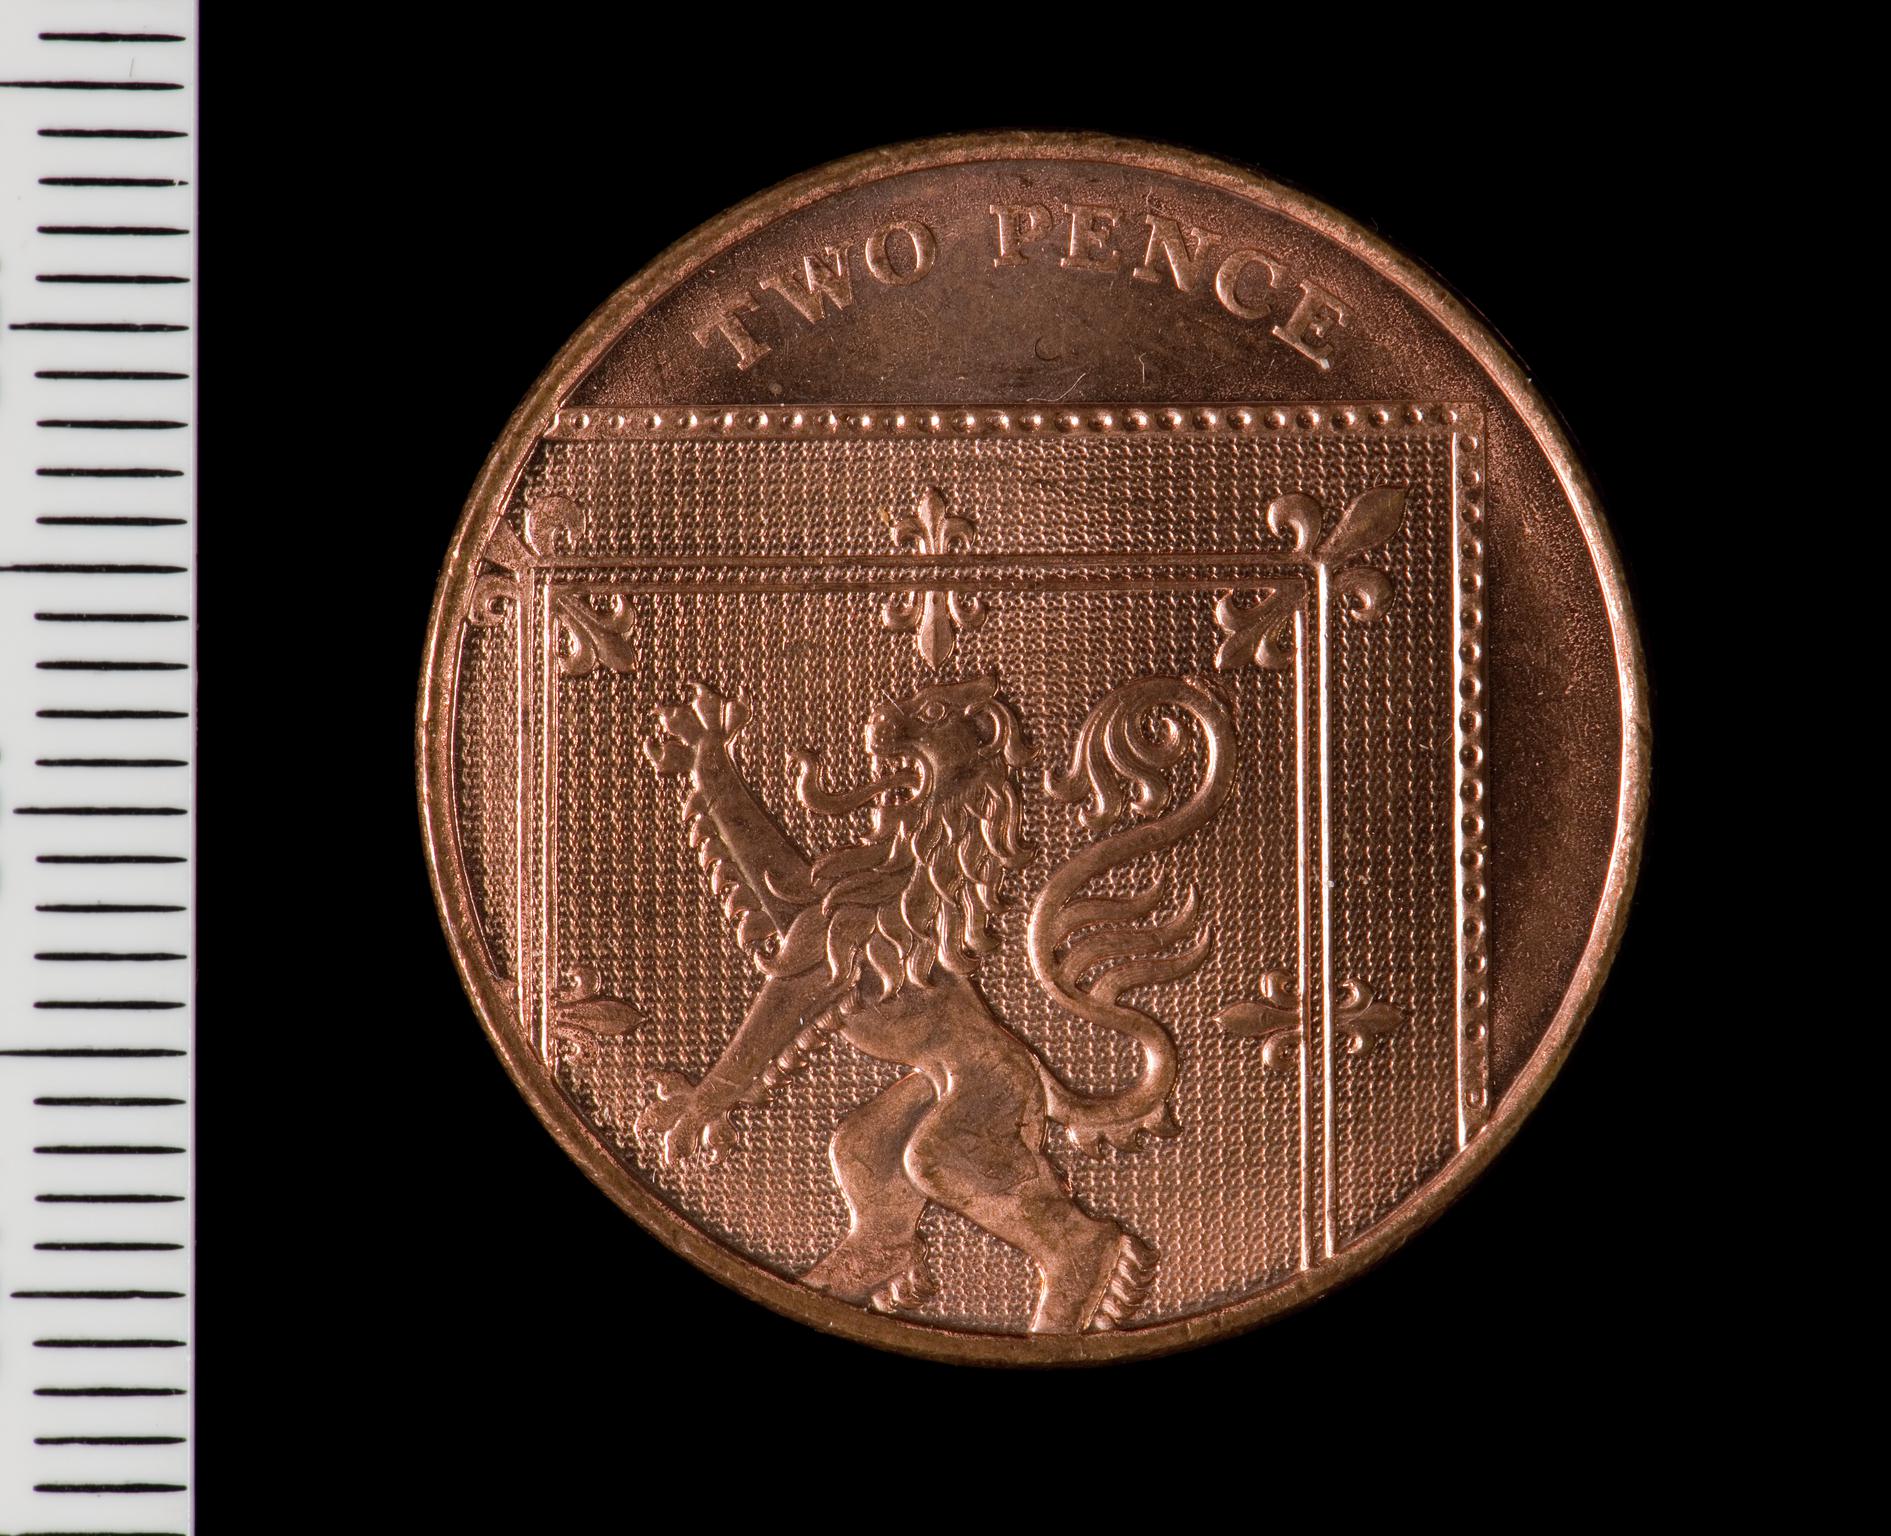 Elizabeth II two pence (Royal Arms design)